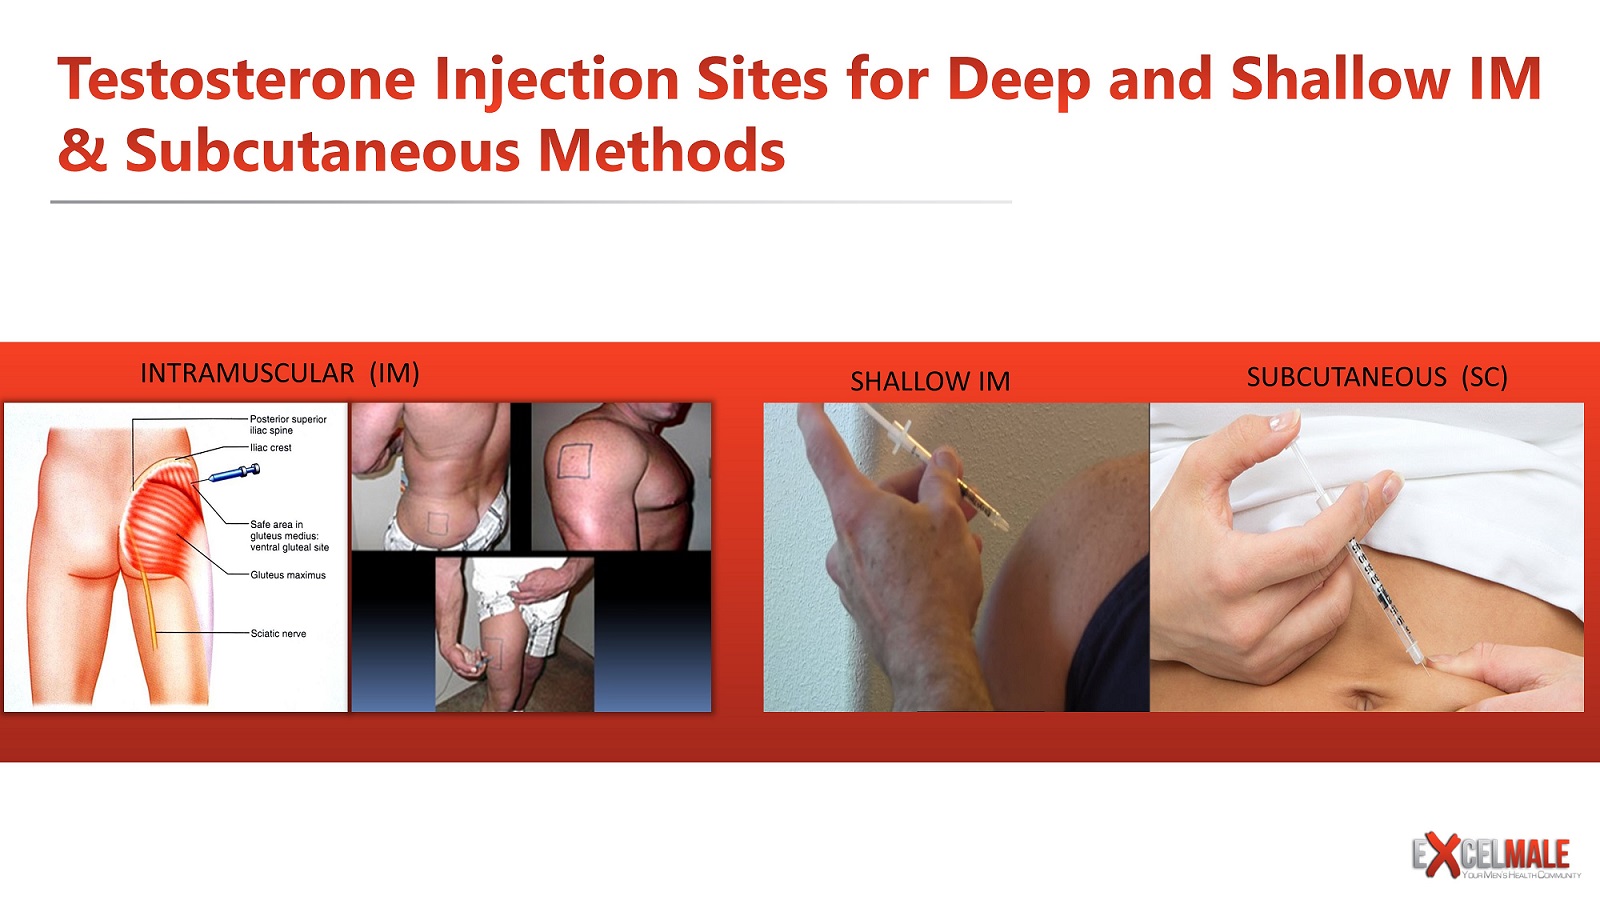 subcutaneous versus intramuscular IM testosterone injections.jpg